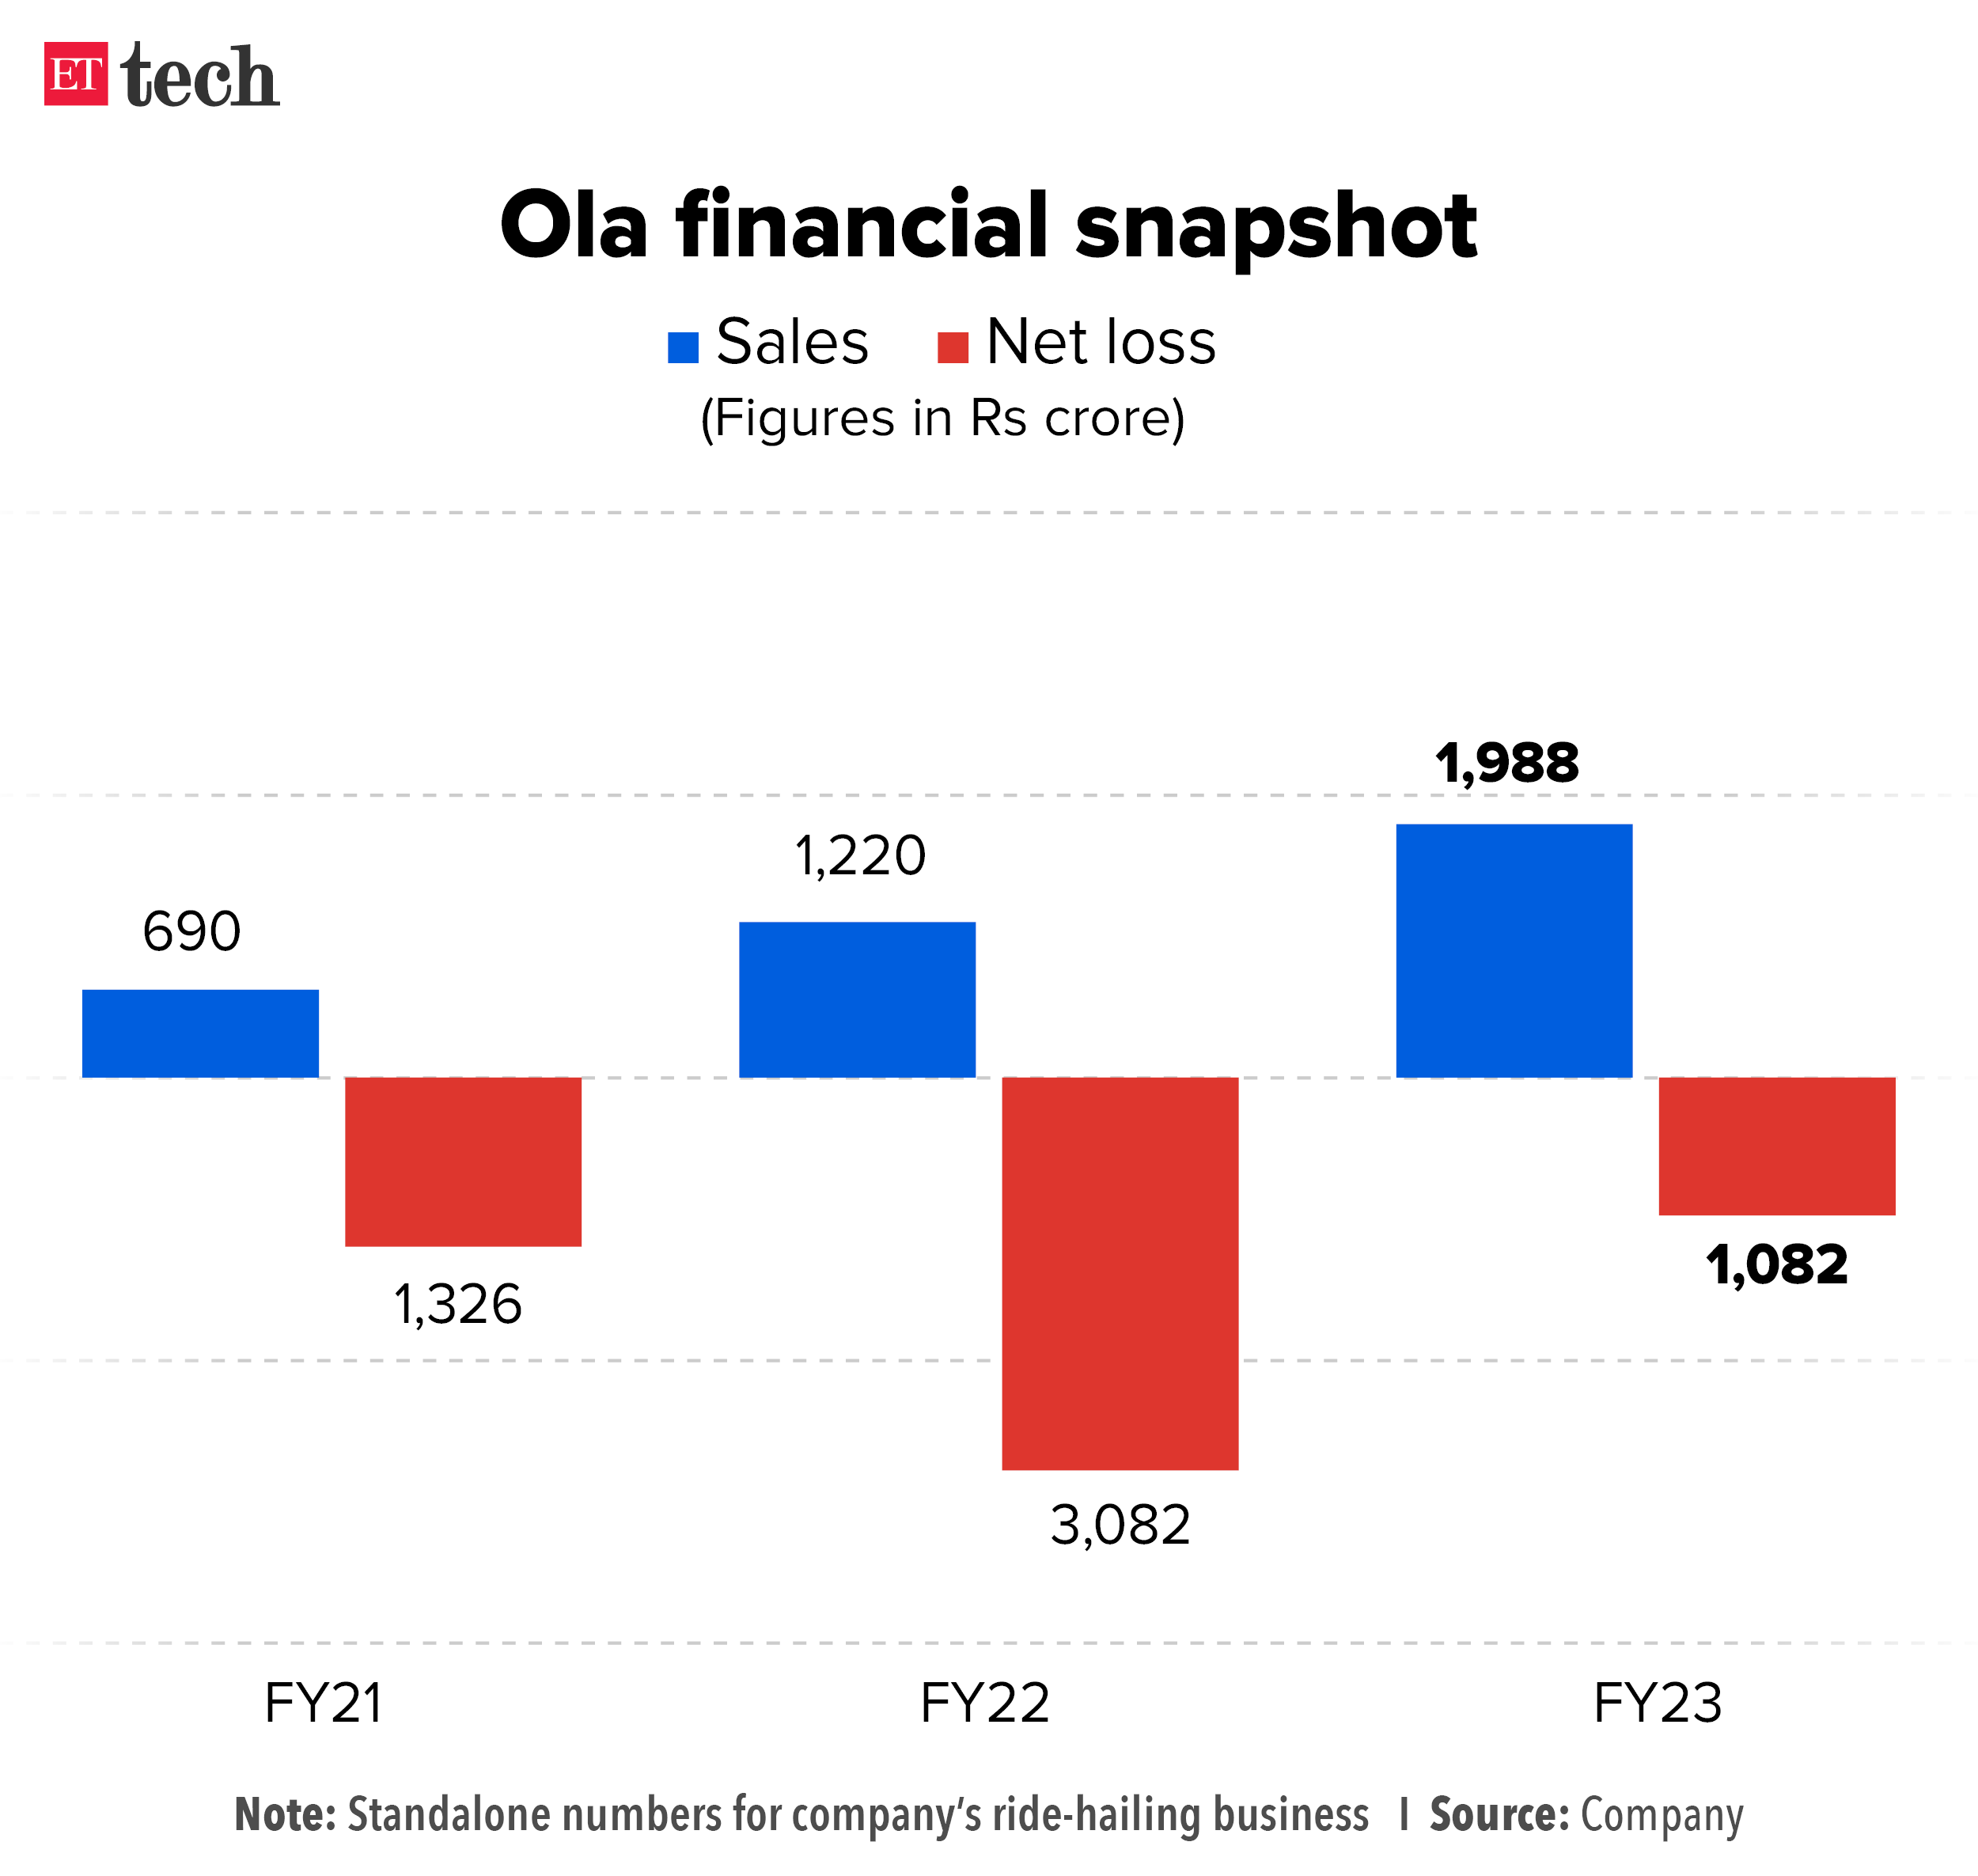 Ola financial snapshot